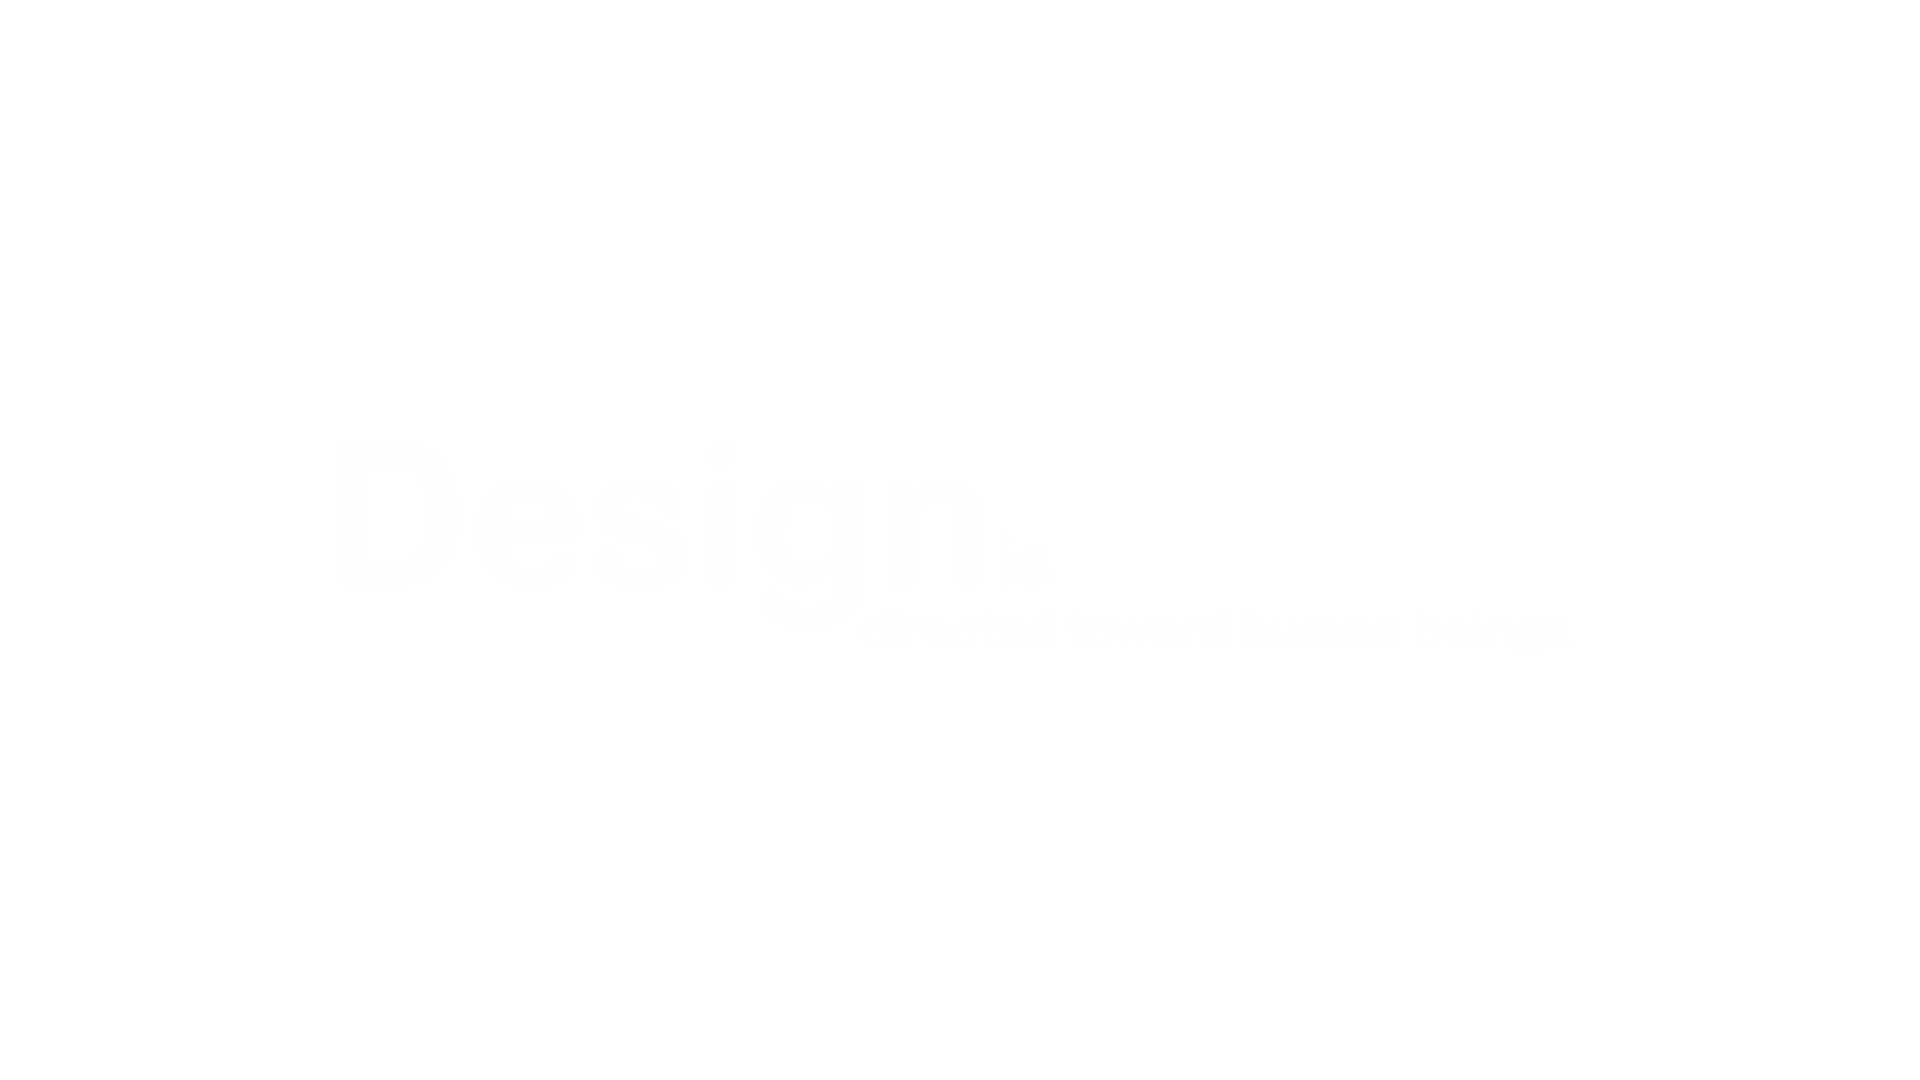 design is directed tward human being.